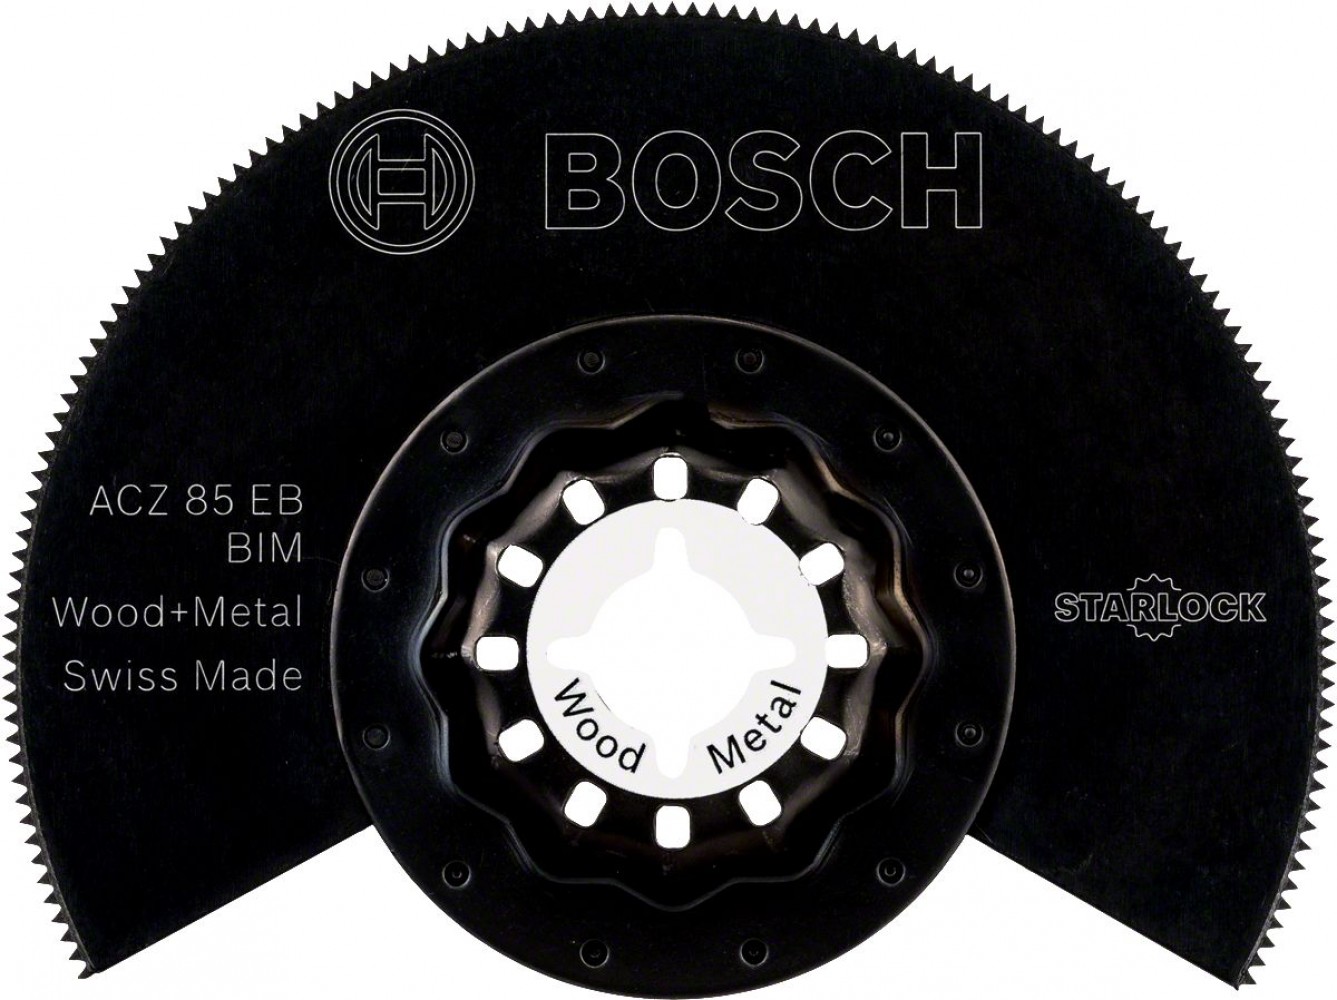 Bosch - Starlock - ACZ 85 EB - BIM Ahşap ve Metal İçin Segman Testere Bıçağı